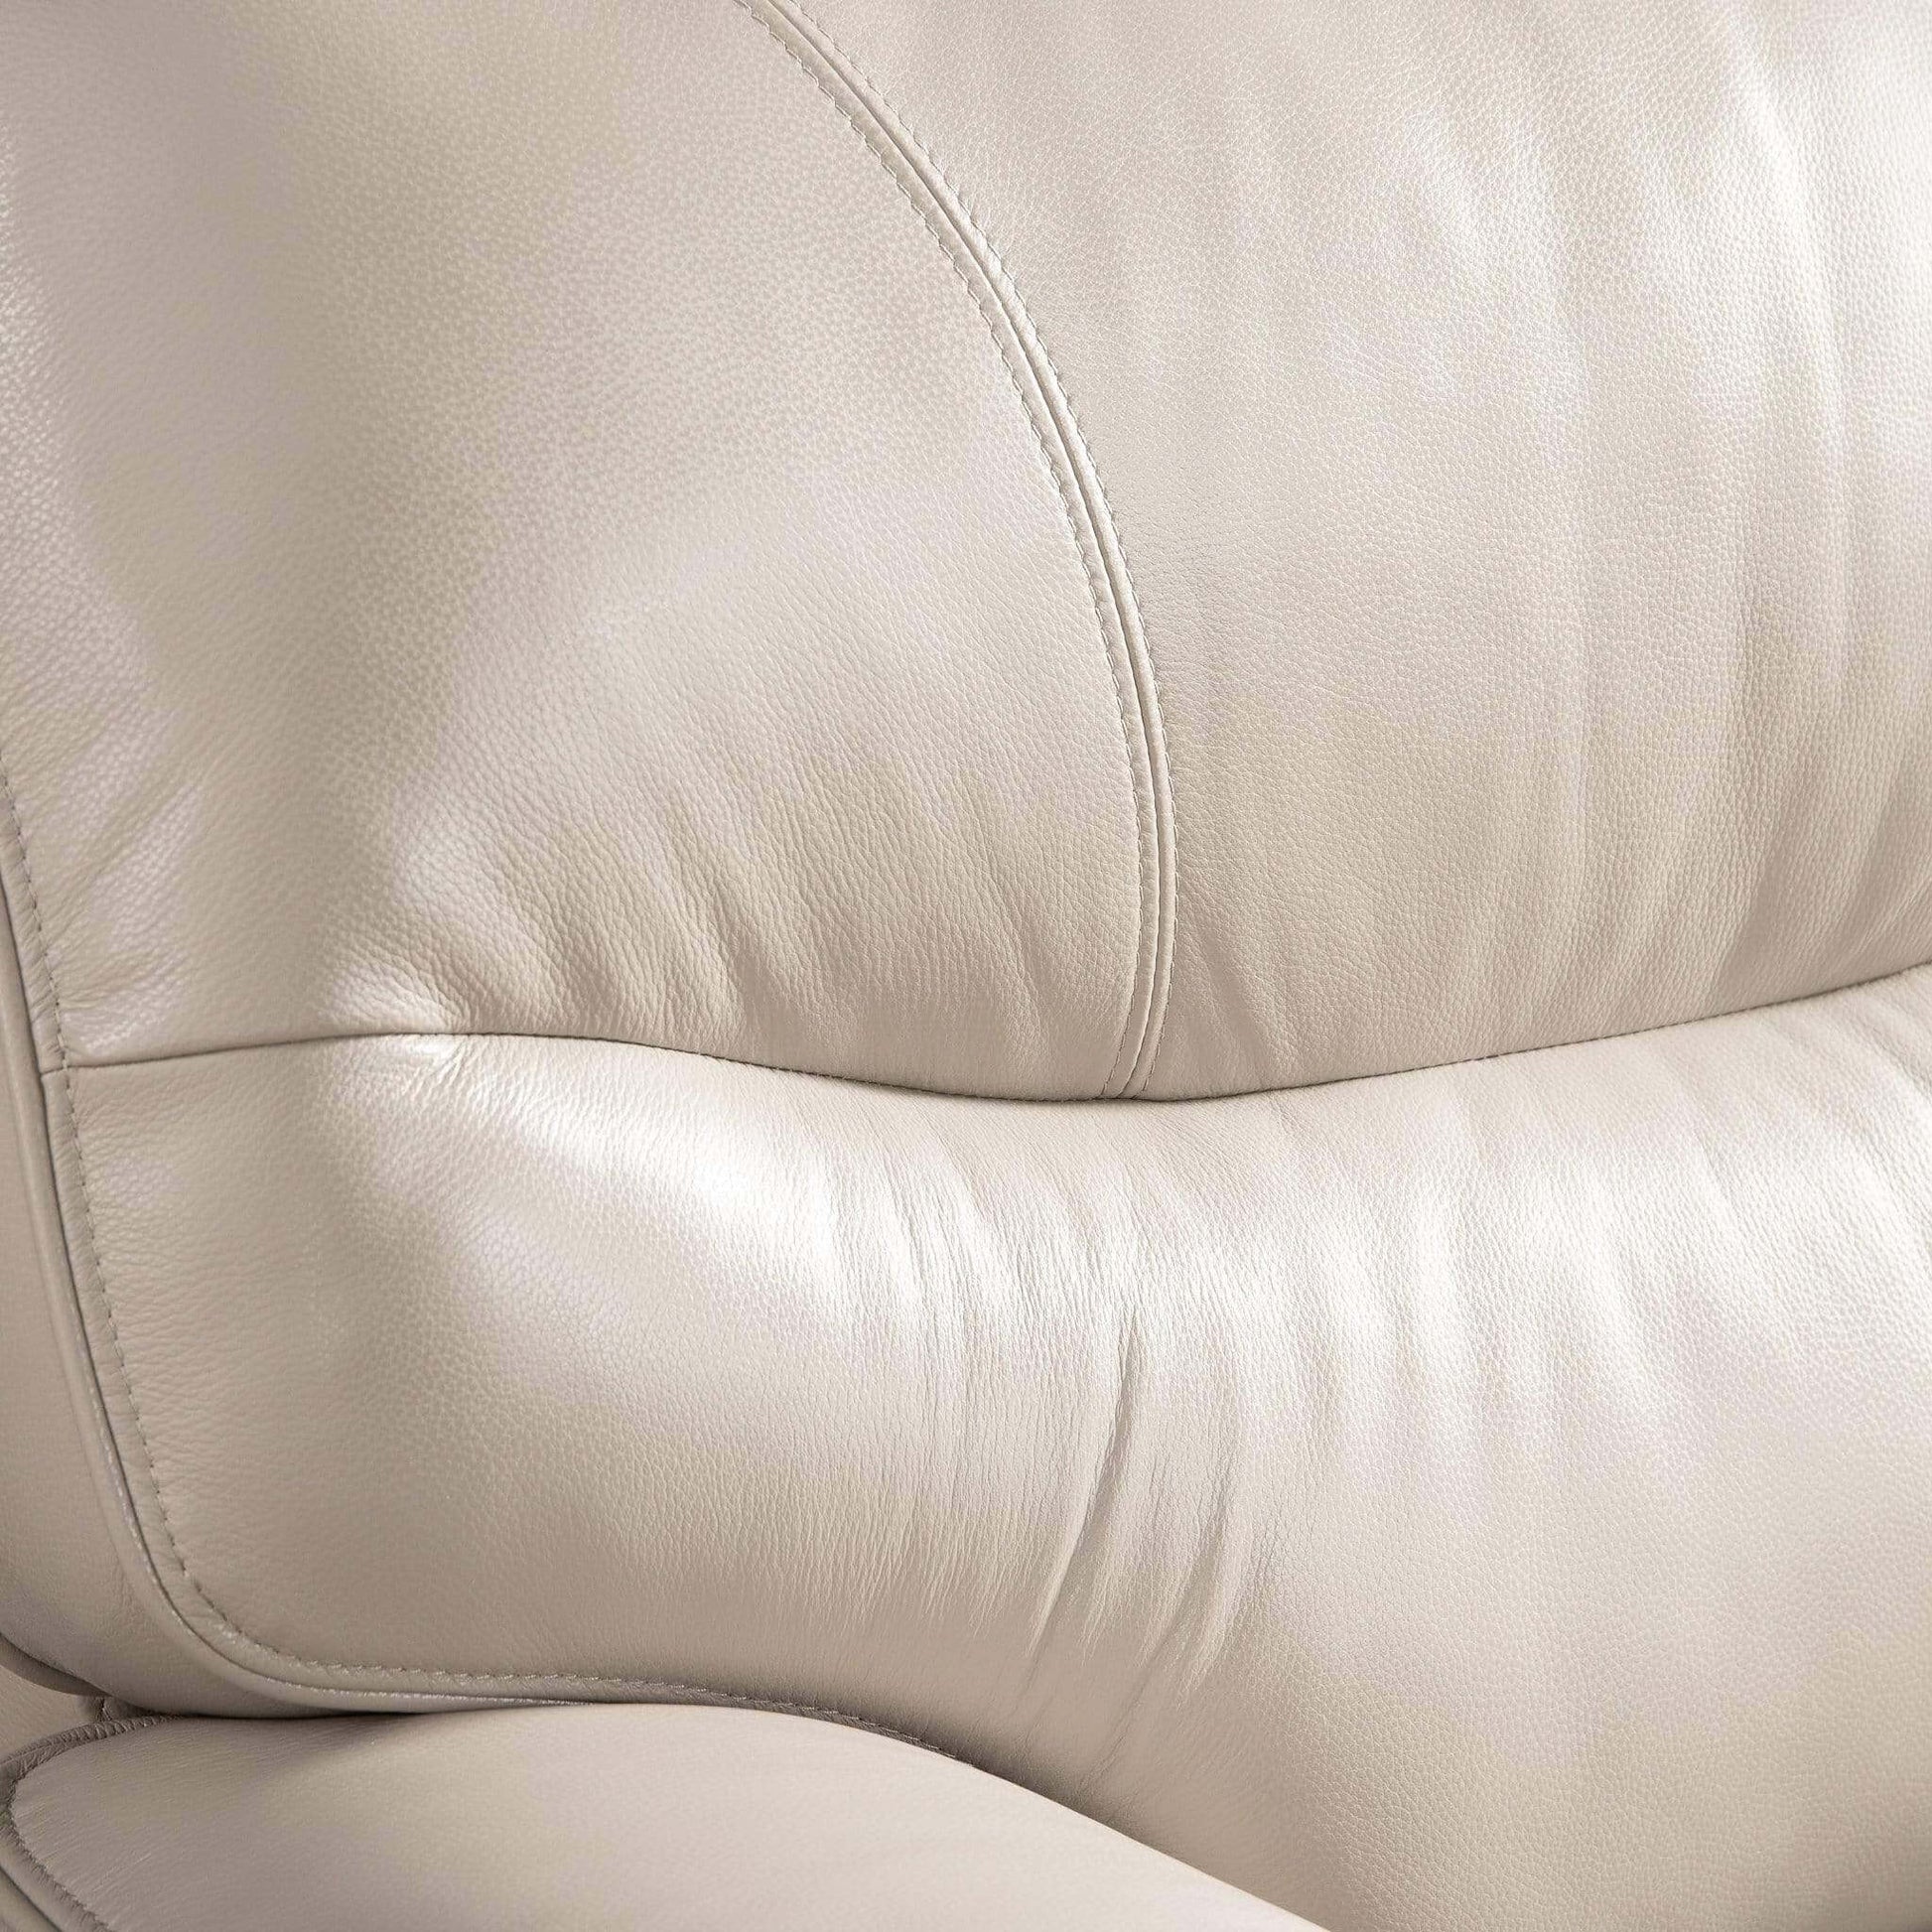 Furniture  -  Comfort King Napa Electric Reclining Chair - Lead Grey  -  50153200